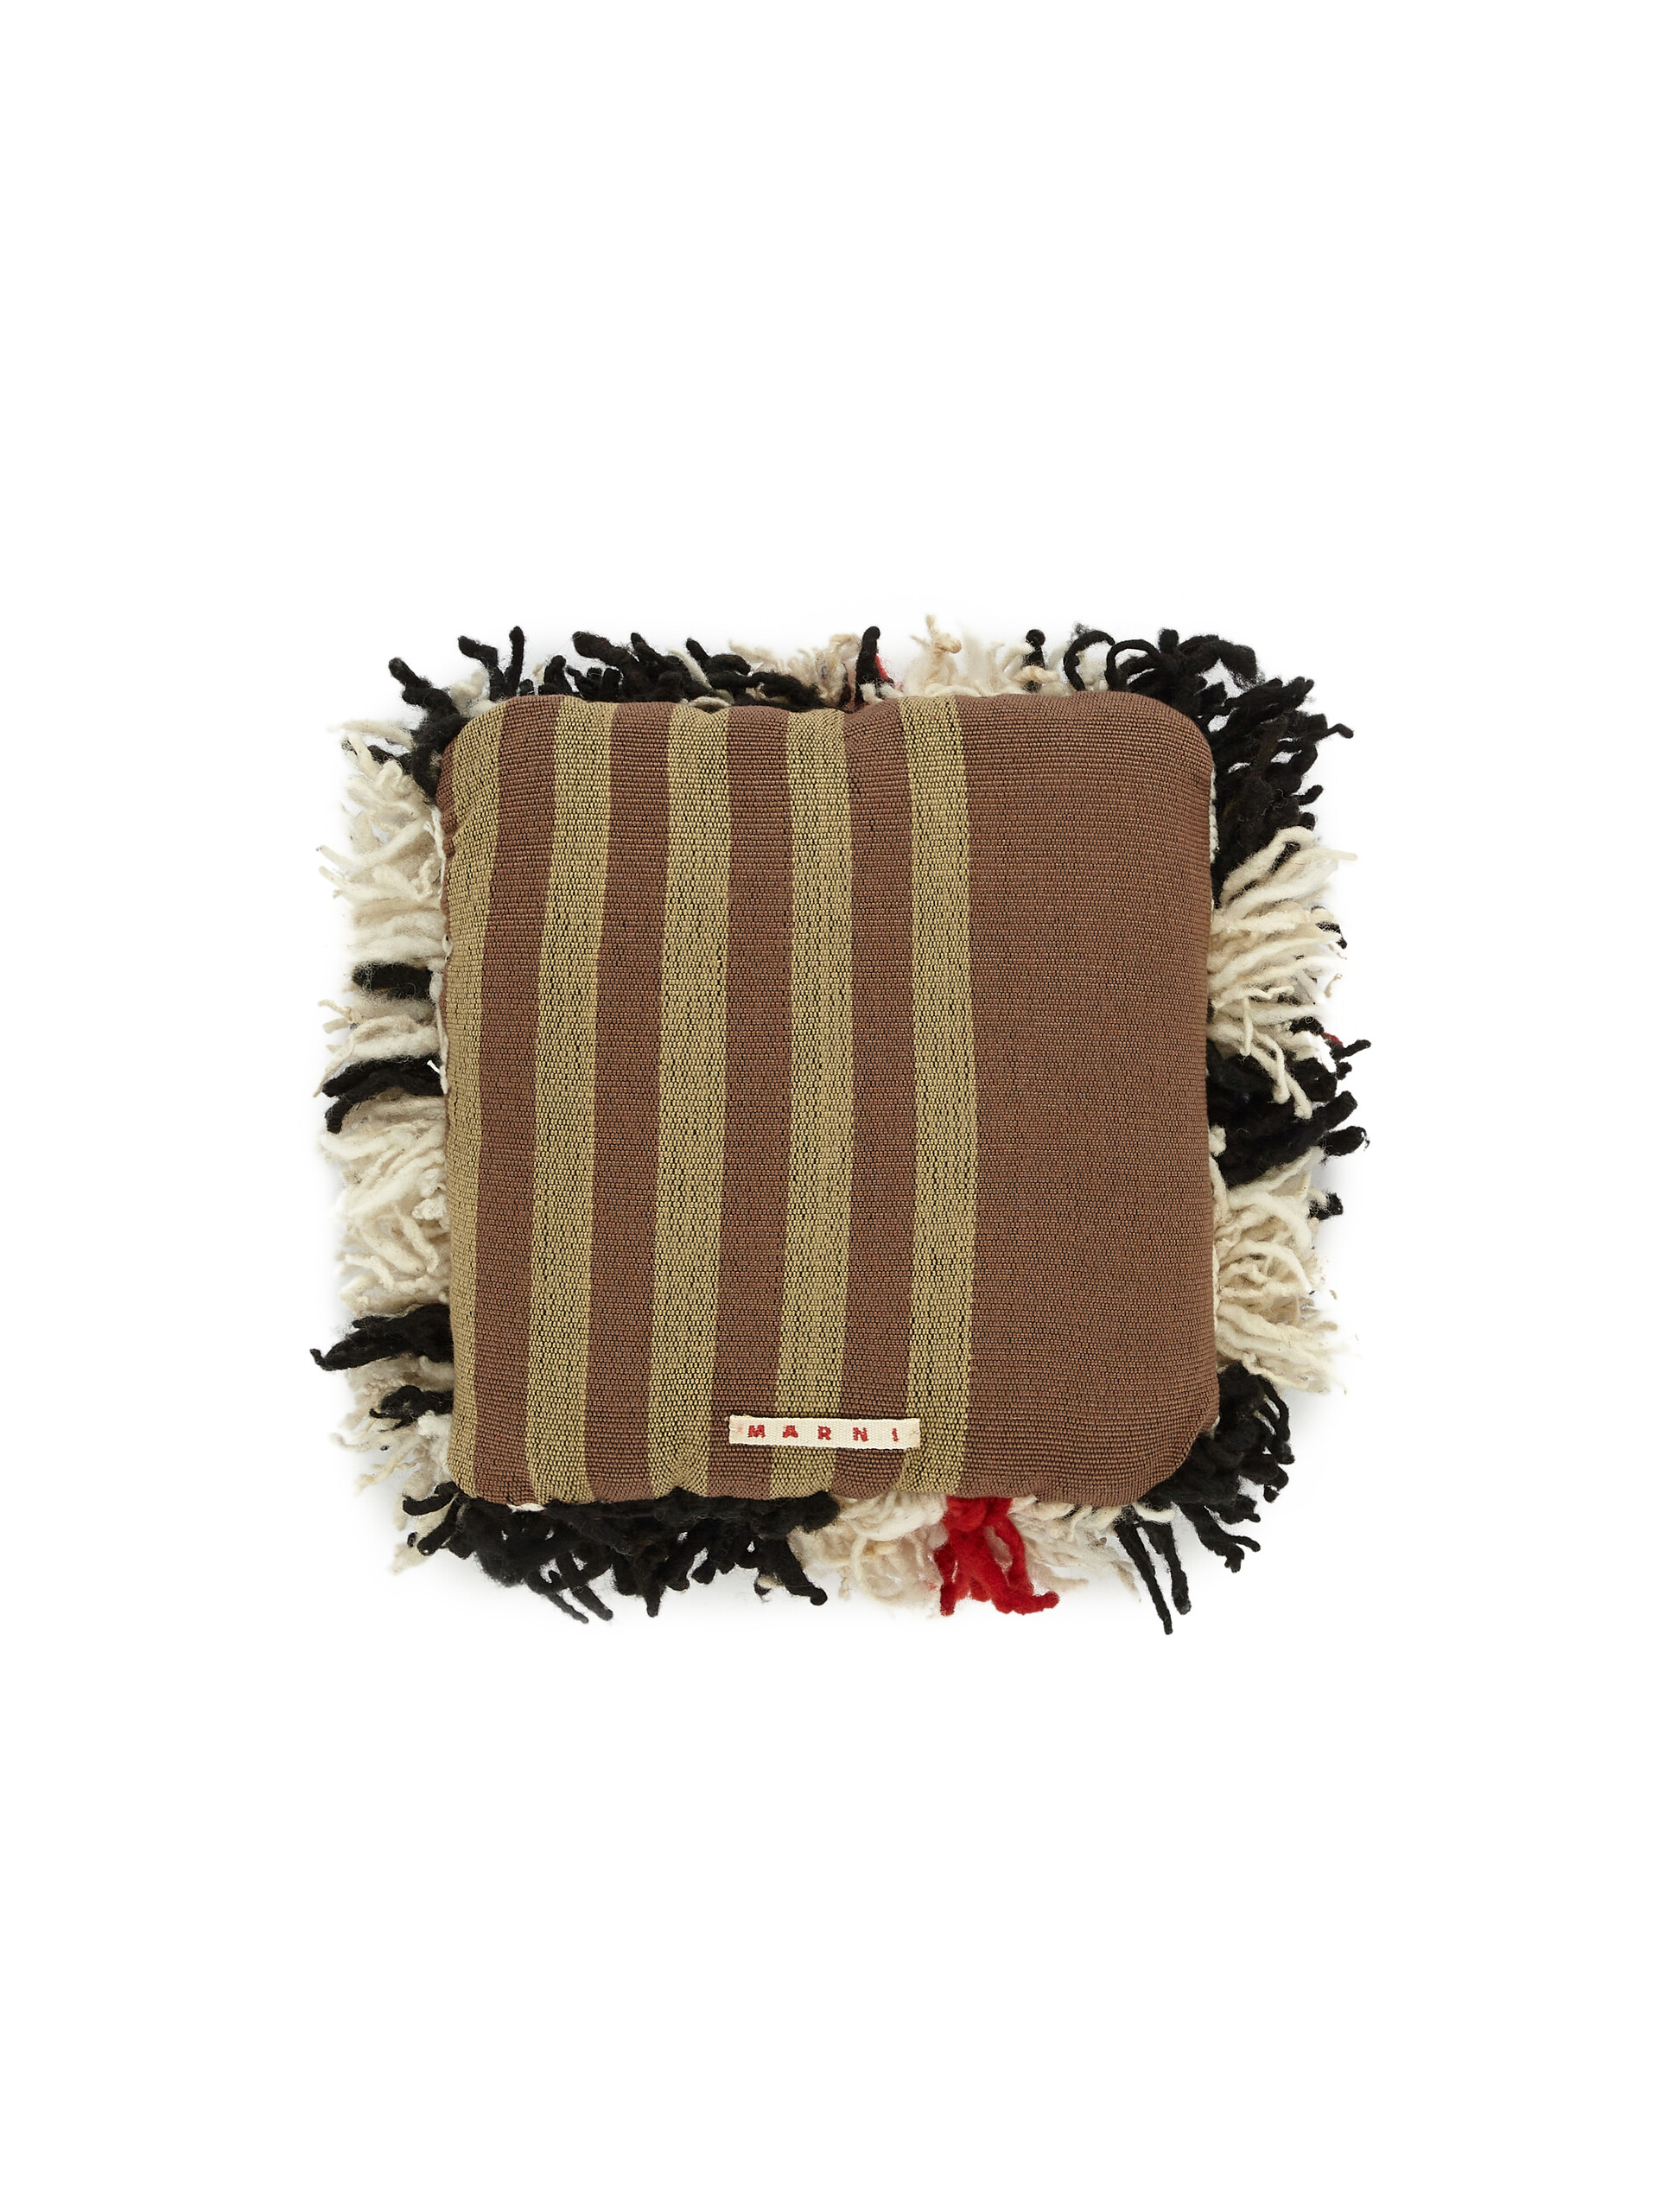 MARNI MARKET pillow in multicolour black wool - Furniture - Image 2